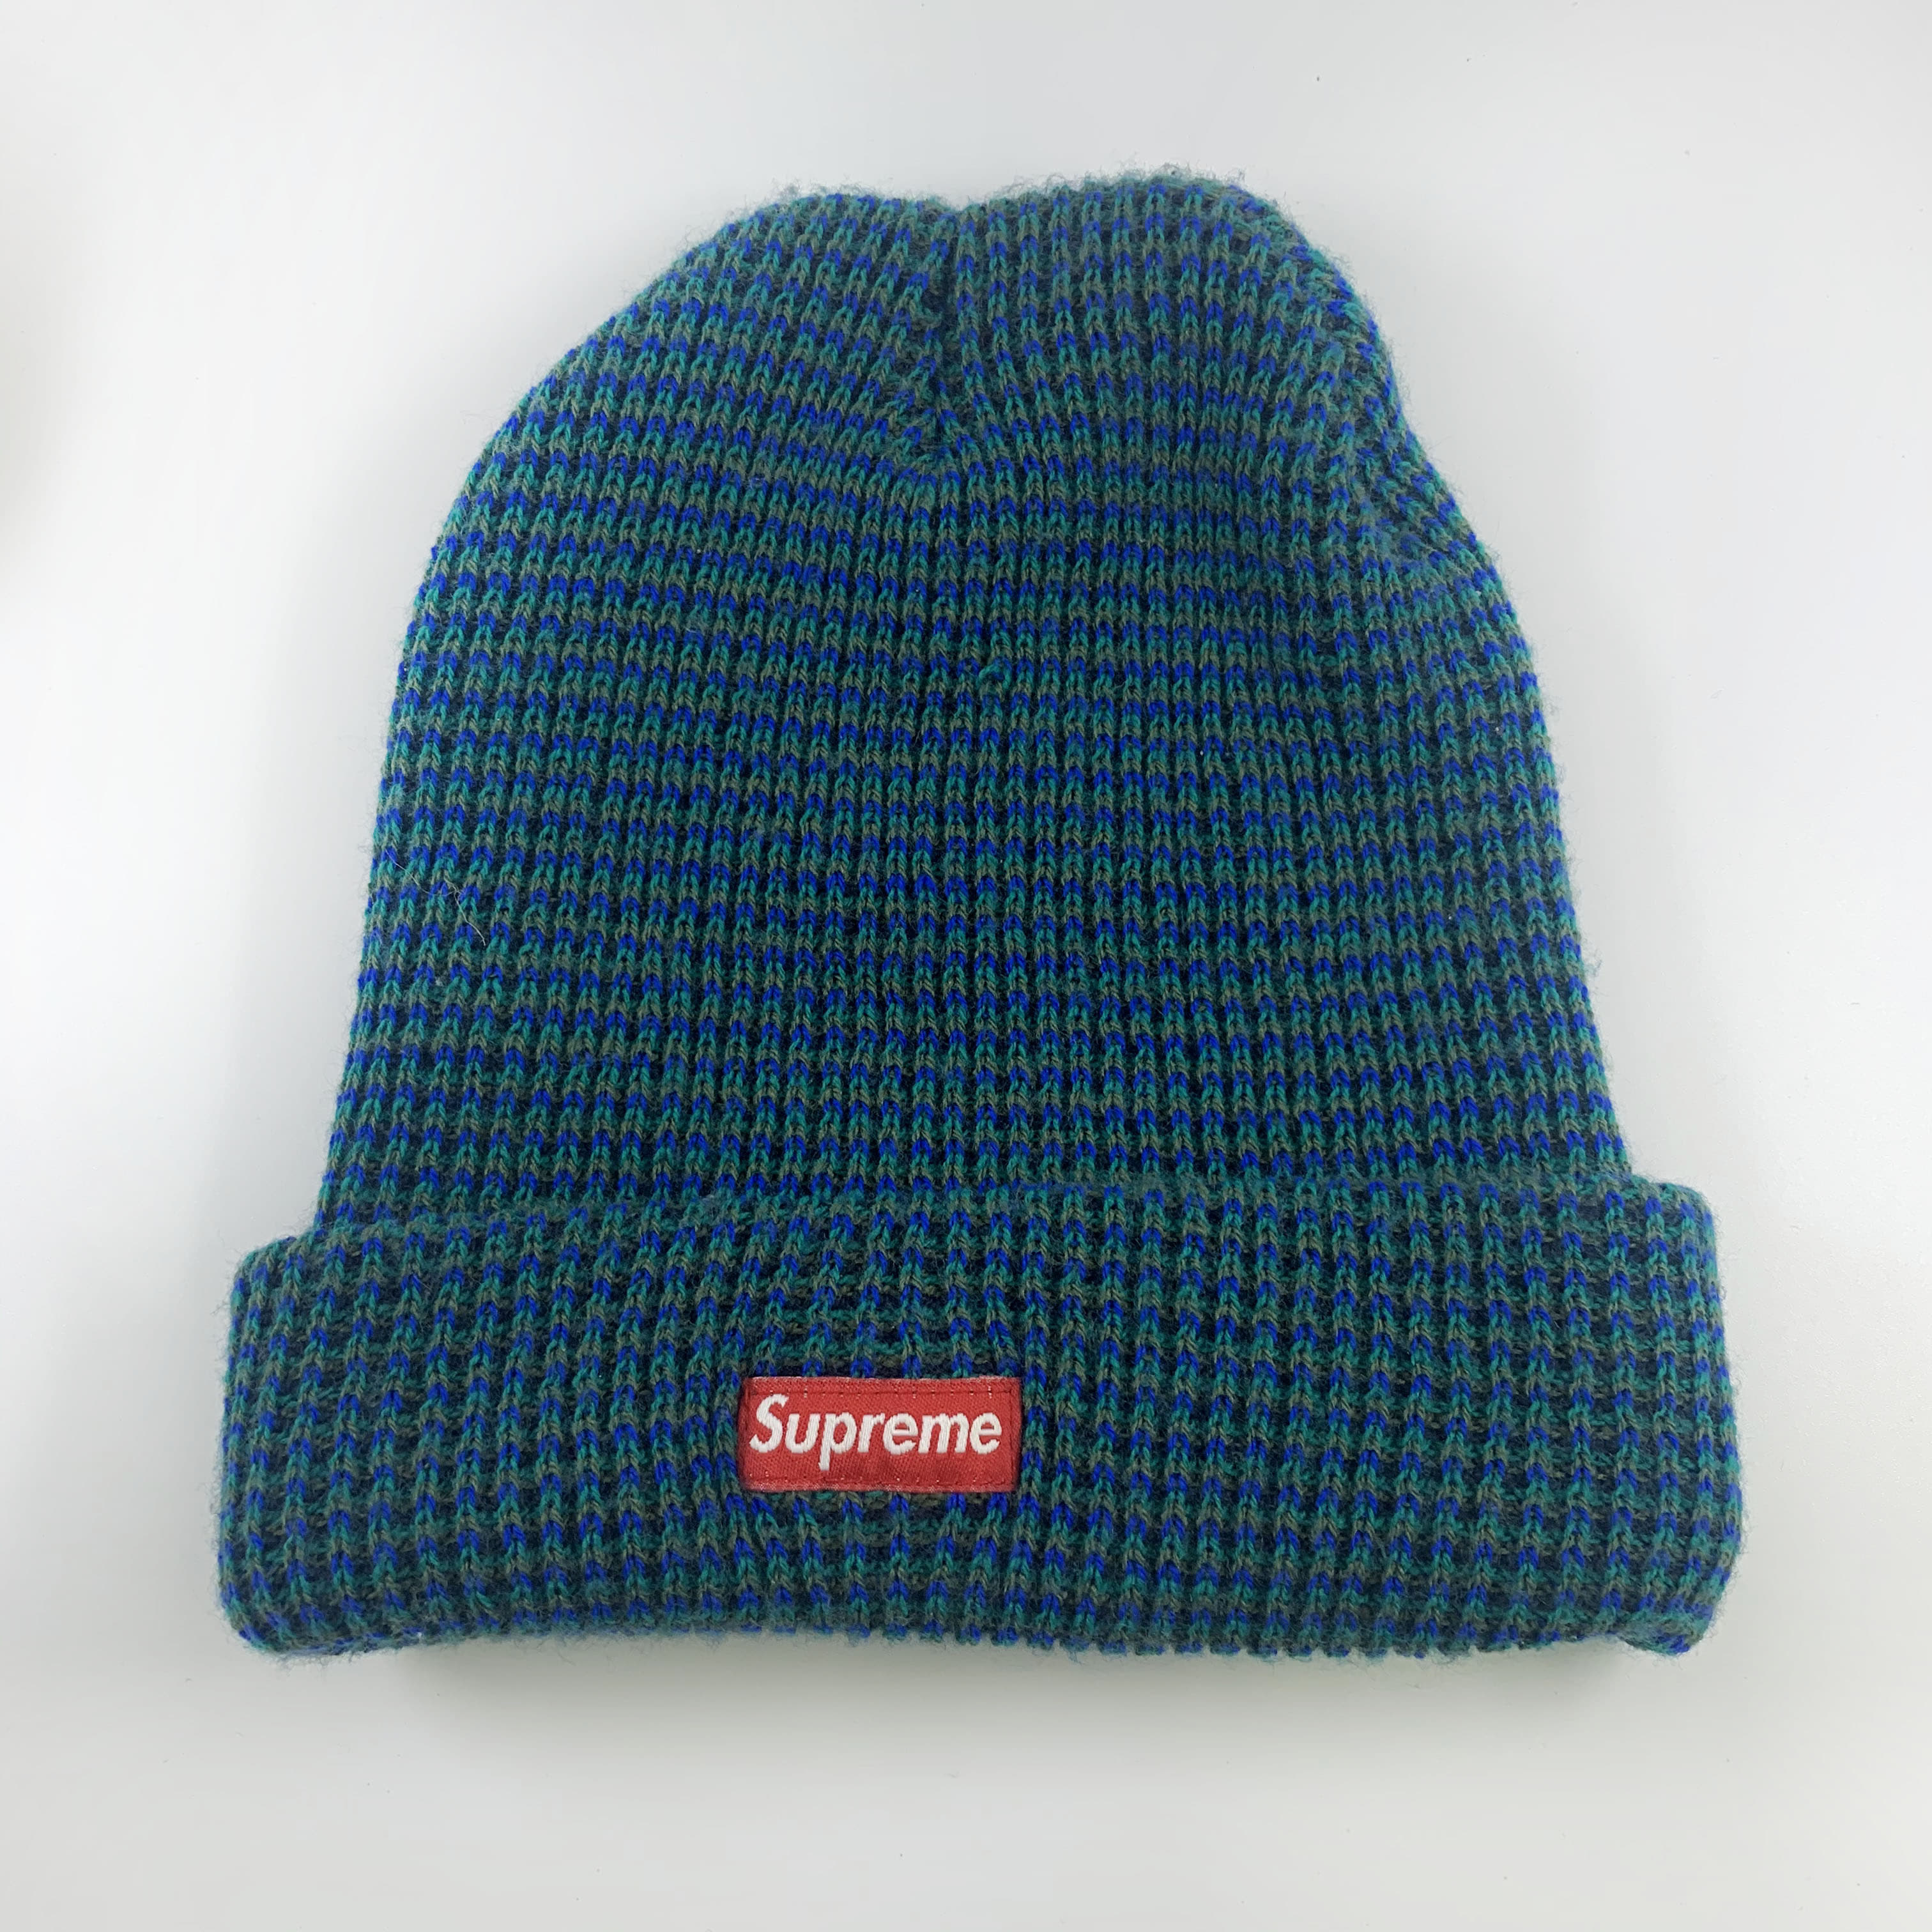 [Supreme] Green Blue Knit Beanie - Size O/S